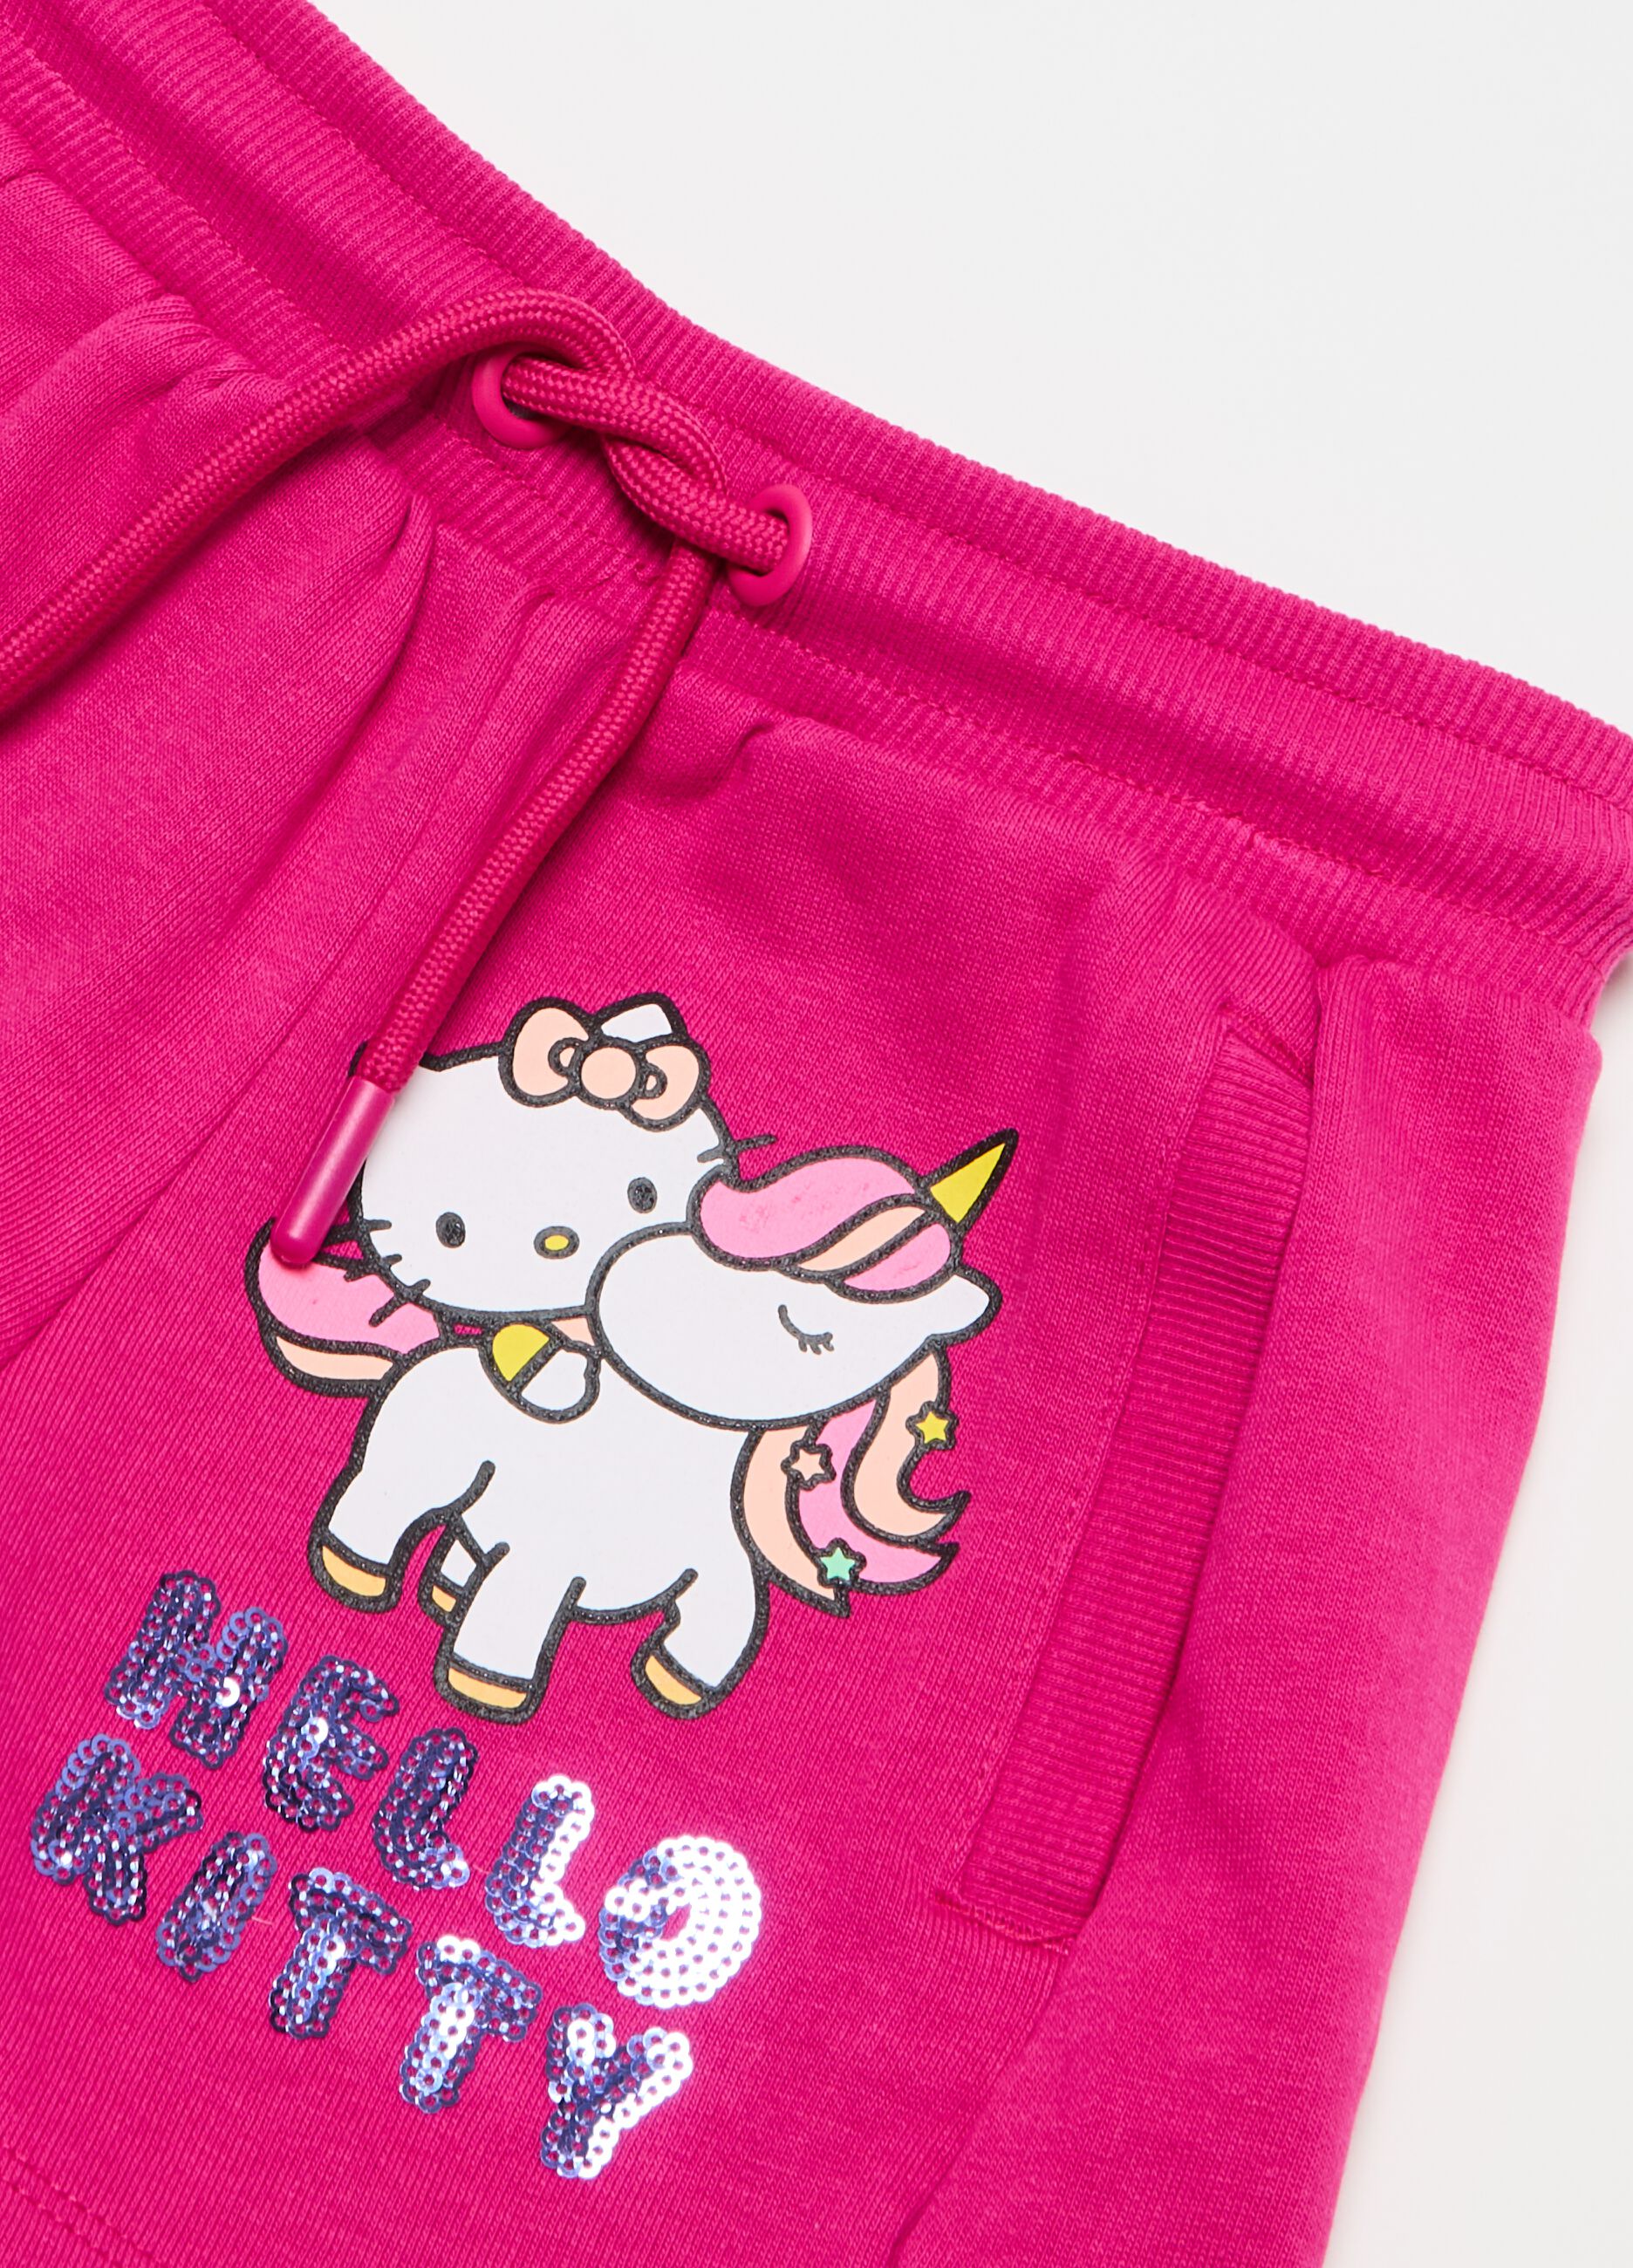 Shorts in felpa con stampa Hello Kitty